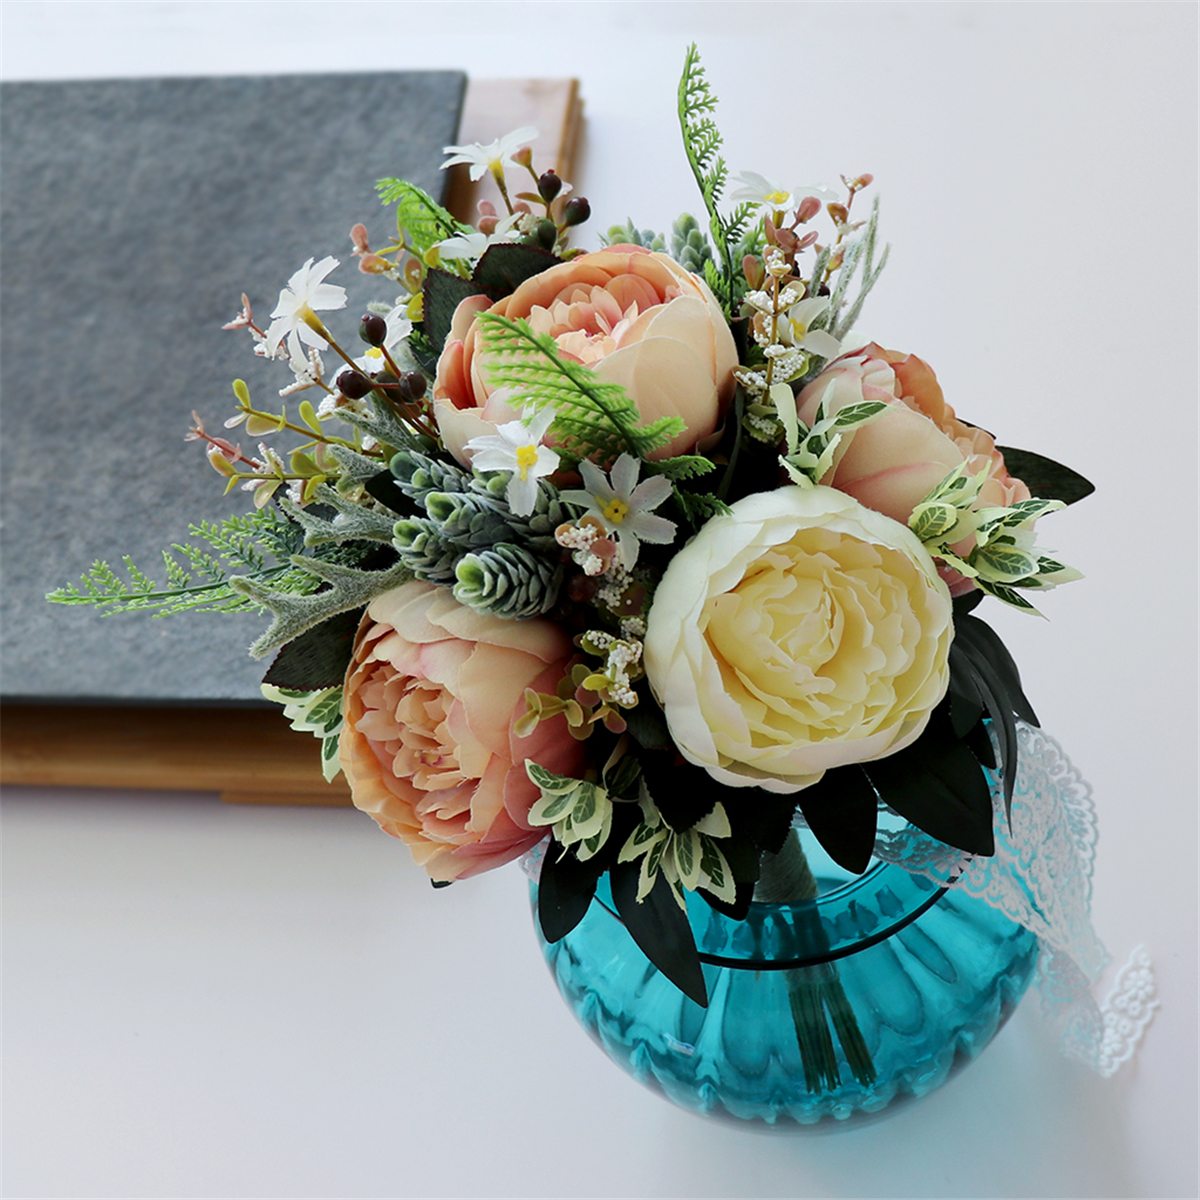 Wedding-Bridal-Bouquets-Handmade-Artificial-Flowers-Decorations-Bride-Accessories-1643090-9